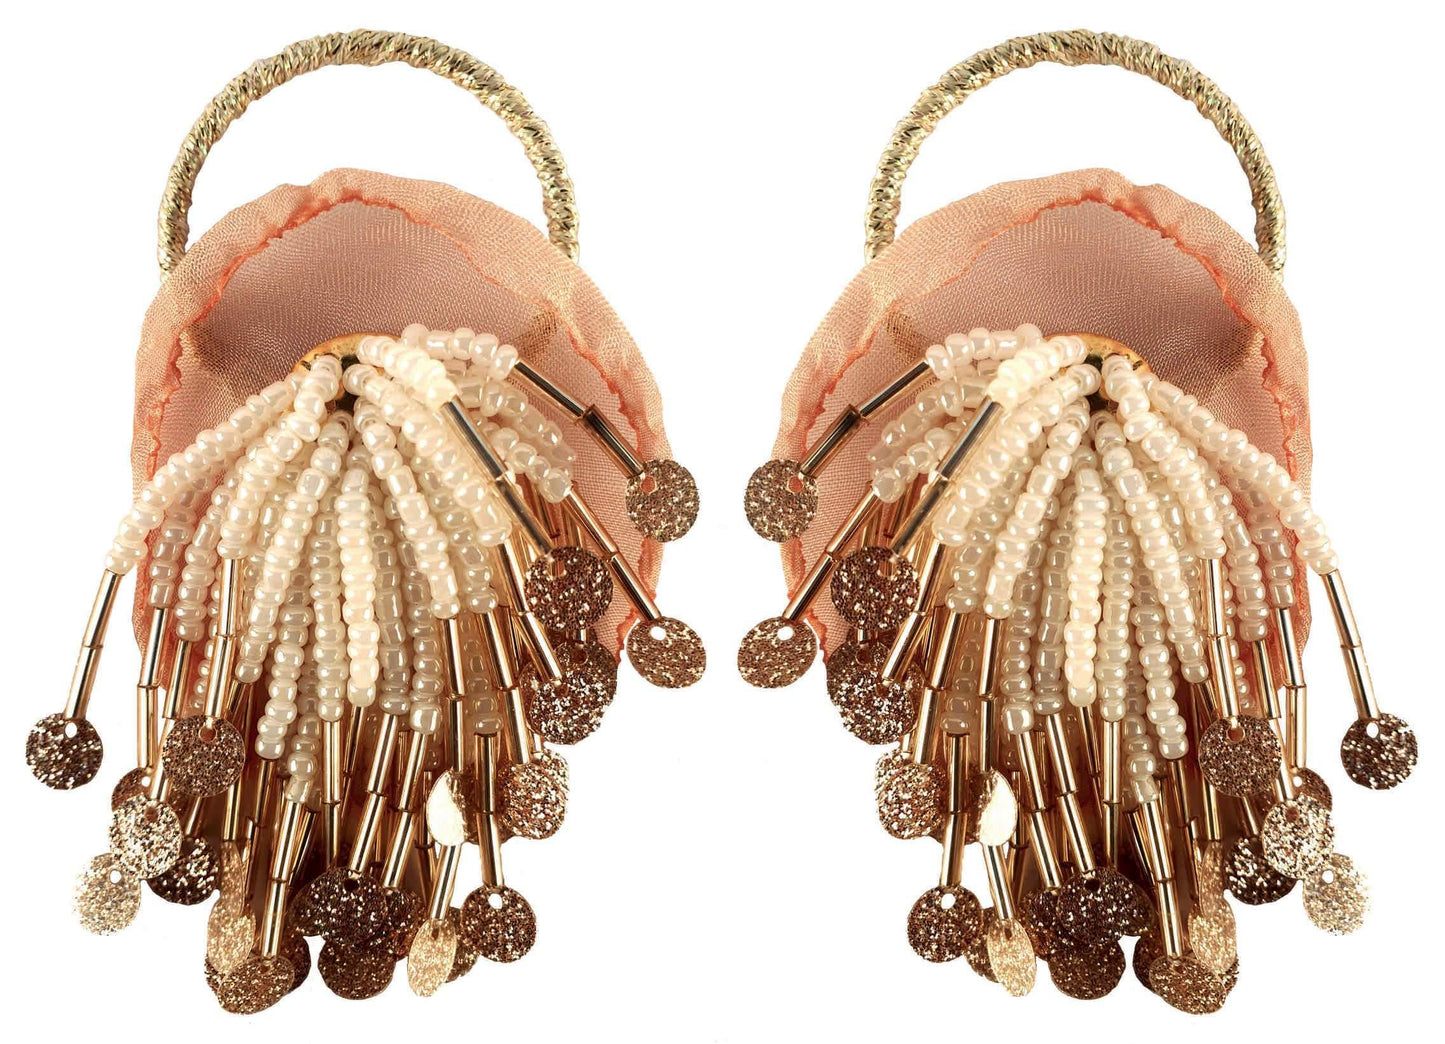 Indian Petals Beaded Tassel with Net Design Artificial Imitation Fashion Dangler Earrings for Girls Women